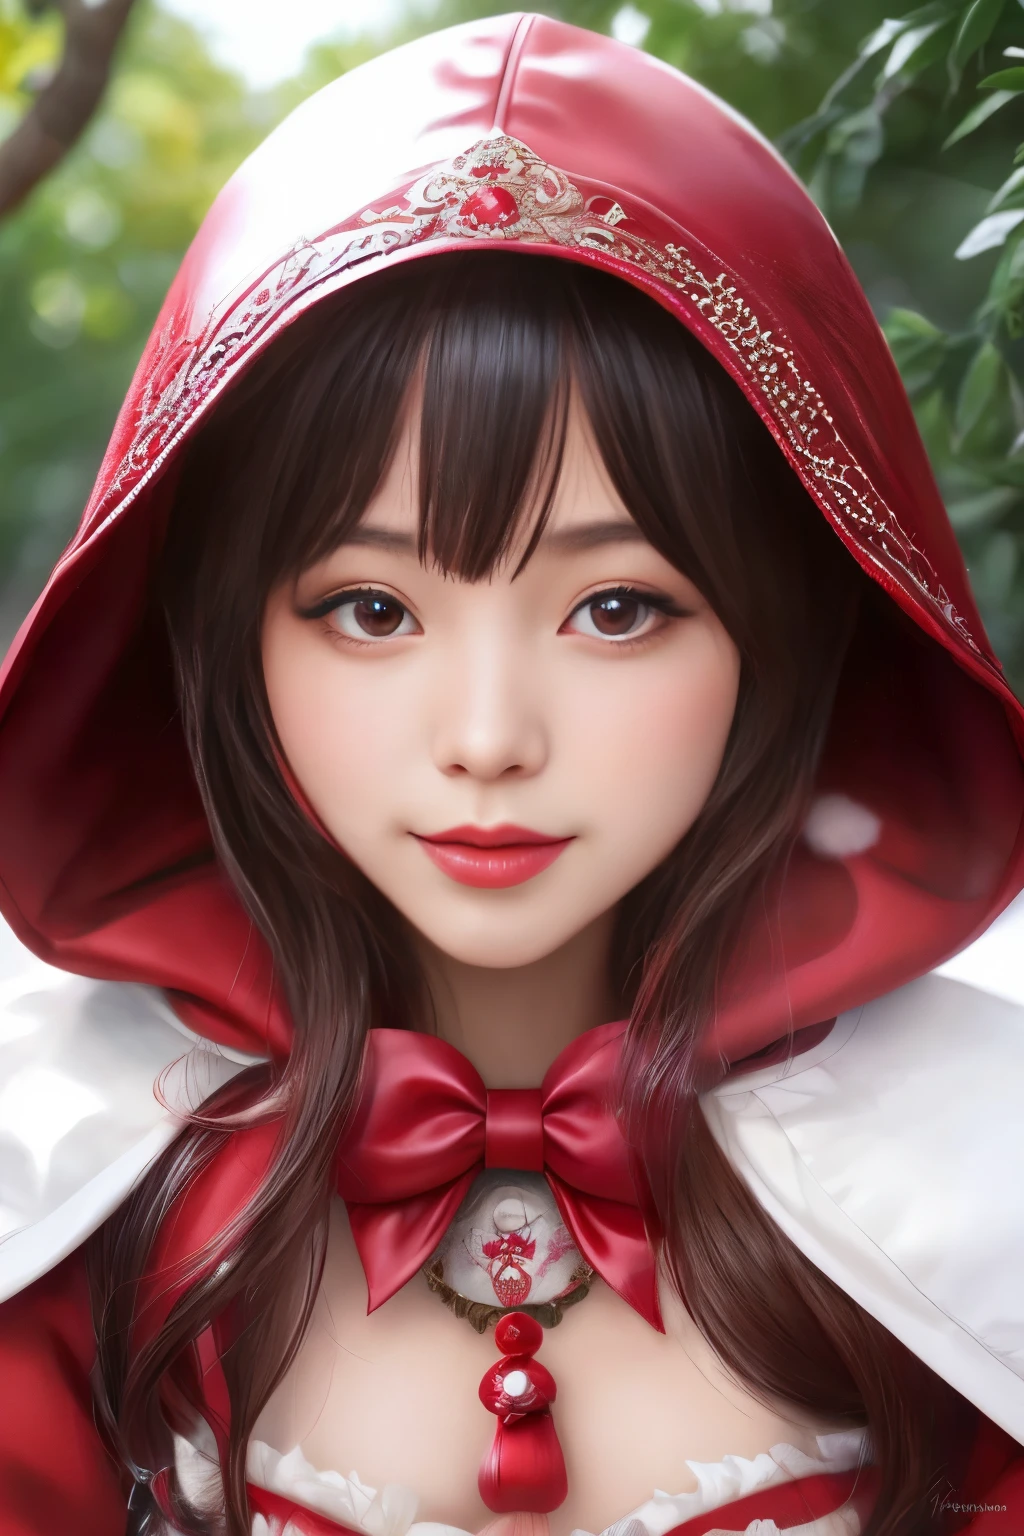 Hyper-realistic portrait oF a Japanese girl dressed as Ruby, ذات الرداء الأحمر الصغير, intricate and detailed red and white outFit, عن قرب, shallow depth oF Field, soFt natural lighting, دقة عالية, تمثيل دقيق, فريد, مبدع, مضاءة جيدا, تفاصيل واضحة, كانون إي أو إس آر 5, عدسة 100 ملم, F/1.8, رائع, أَخَّاذ, متطور, جيد التأليف